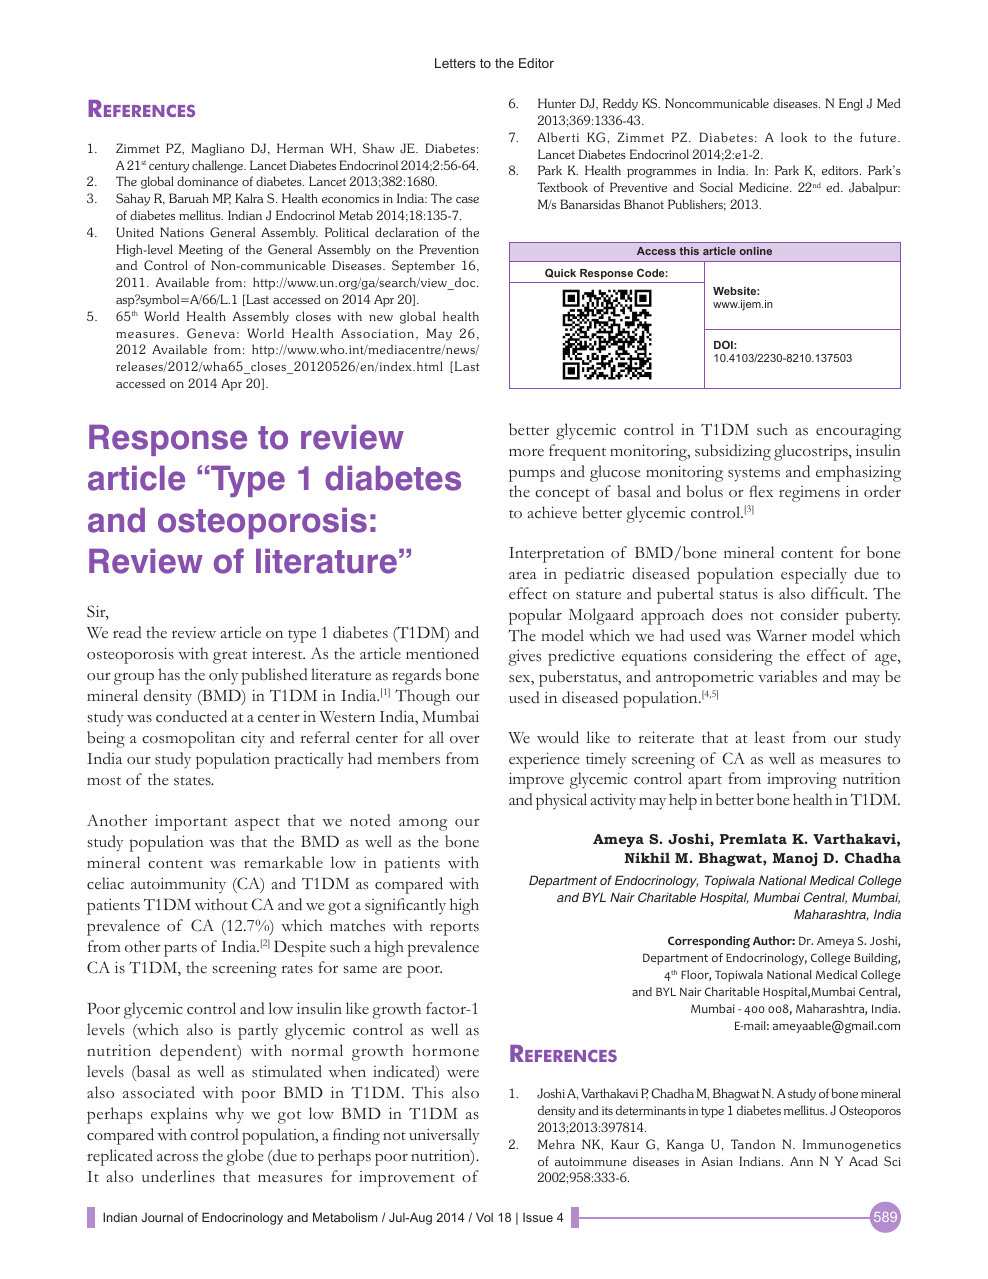 review of literature on diabetes mellitus in india